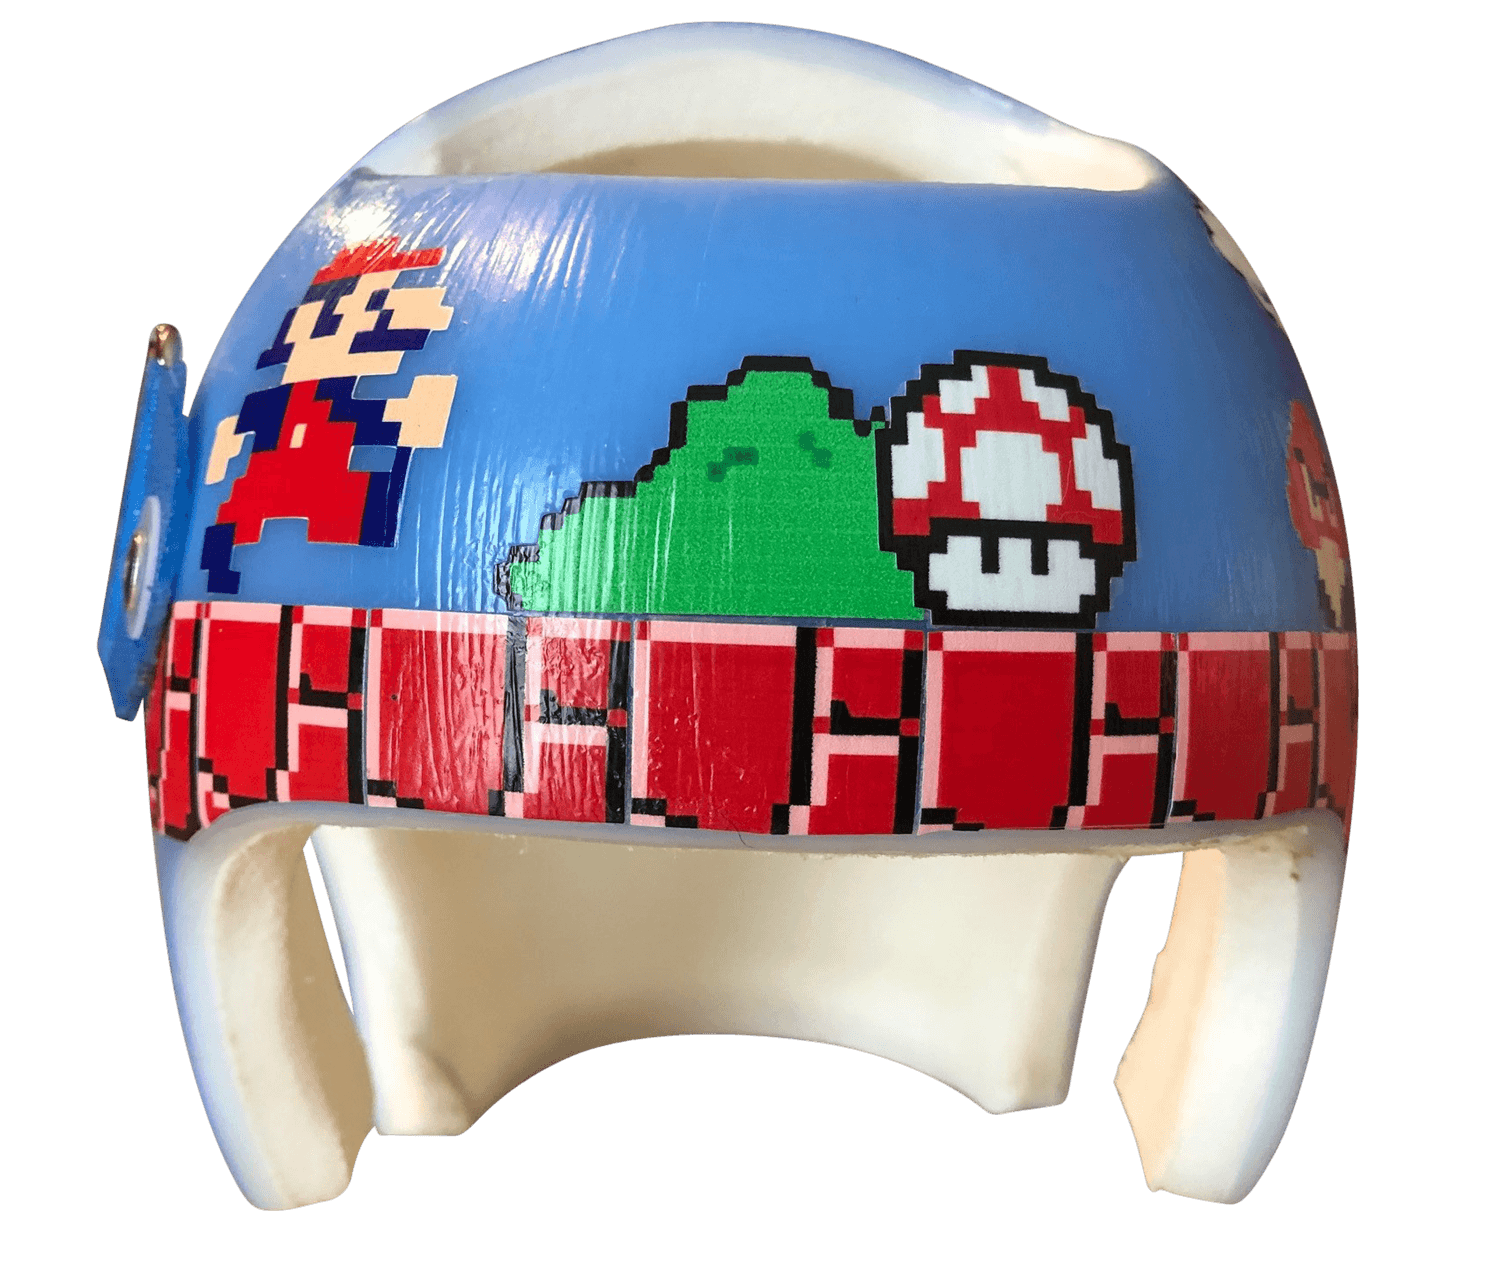 Super Mario cranial band